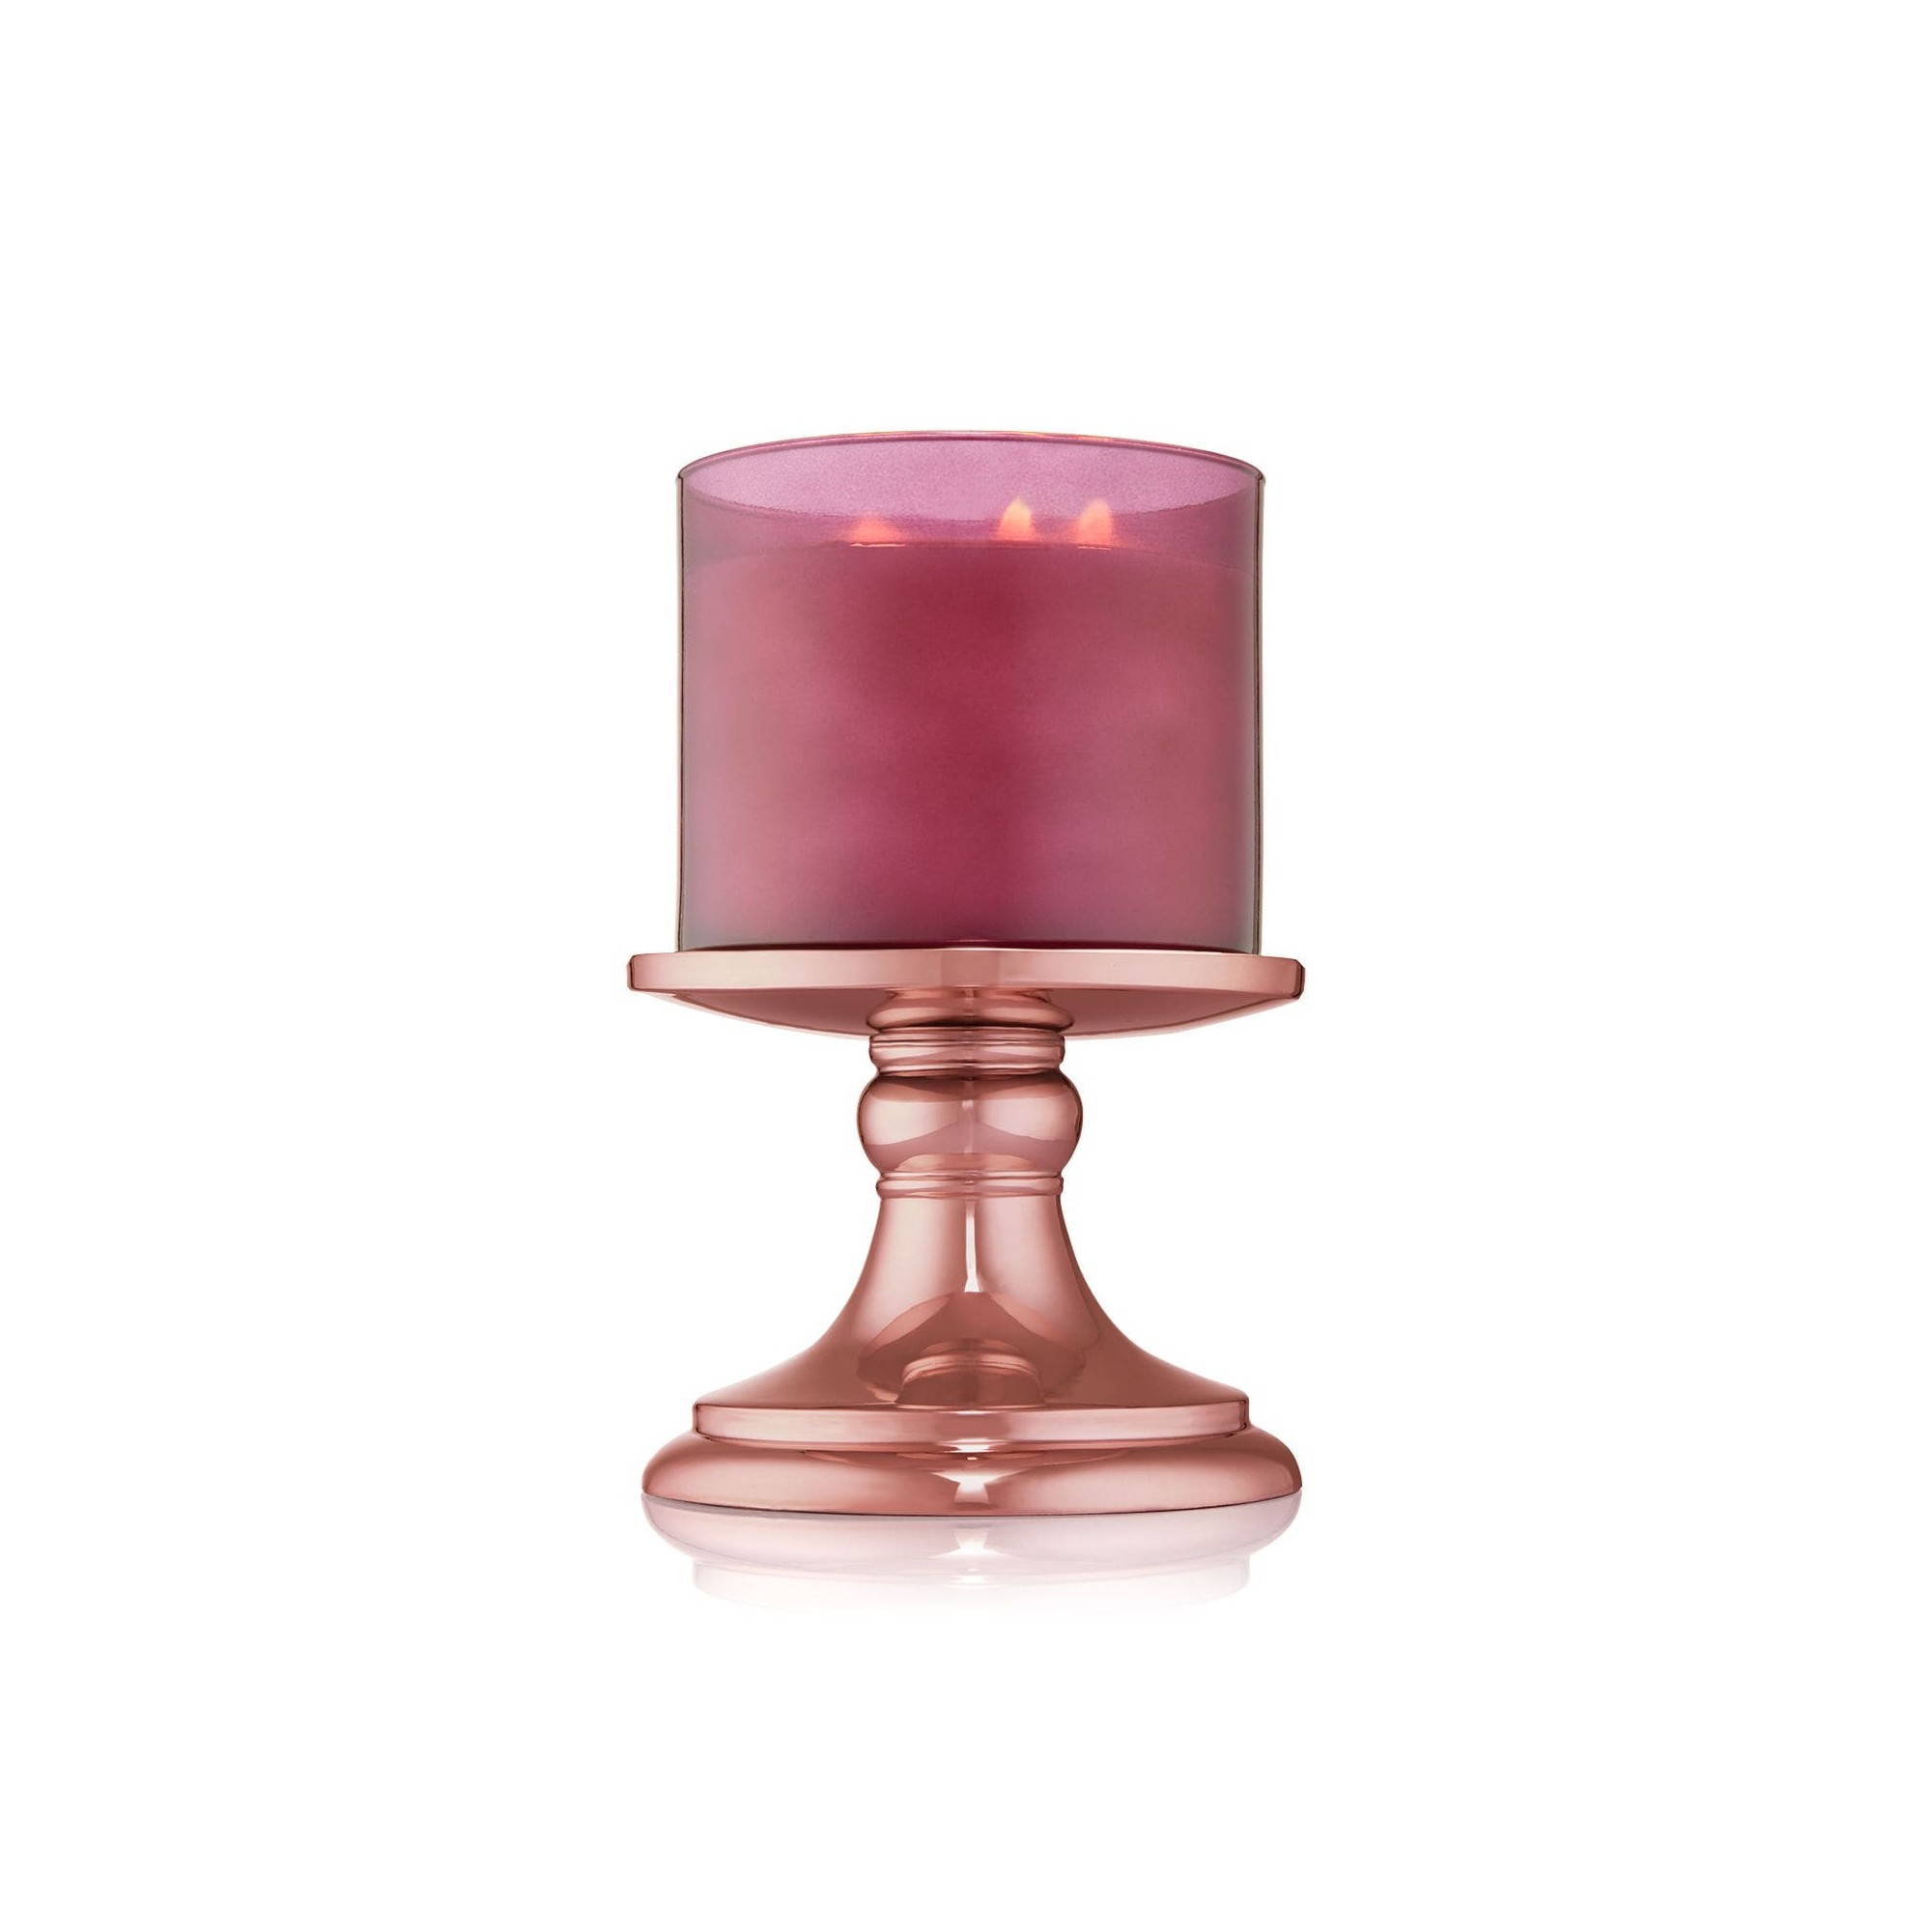 Bath & Body Works Rose Gold Pedestal 3 Wick Candle Holder